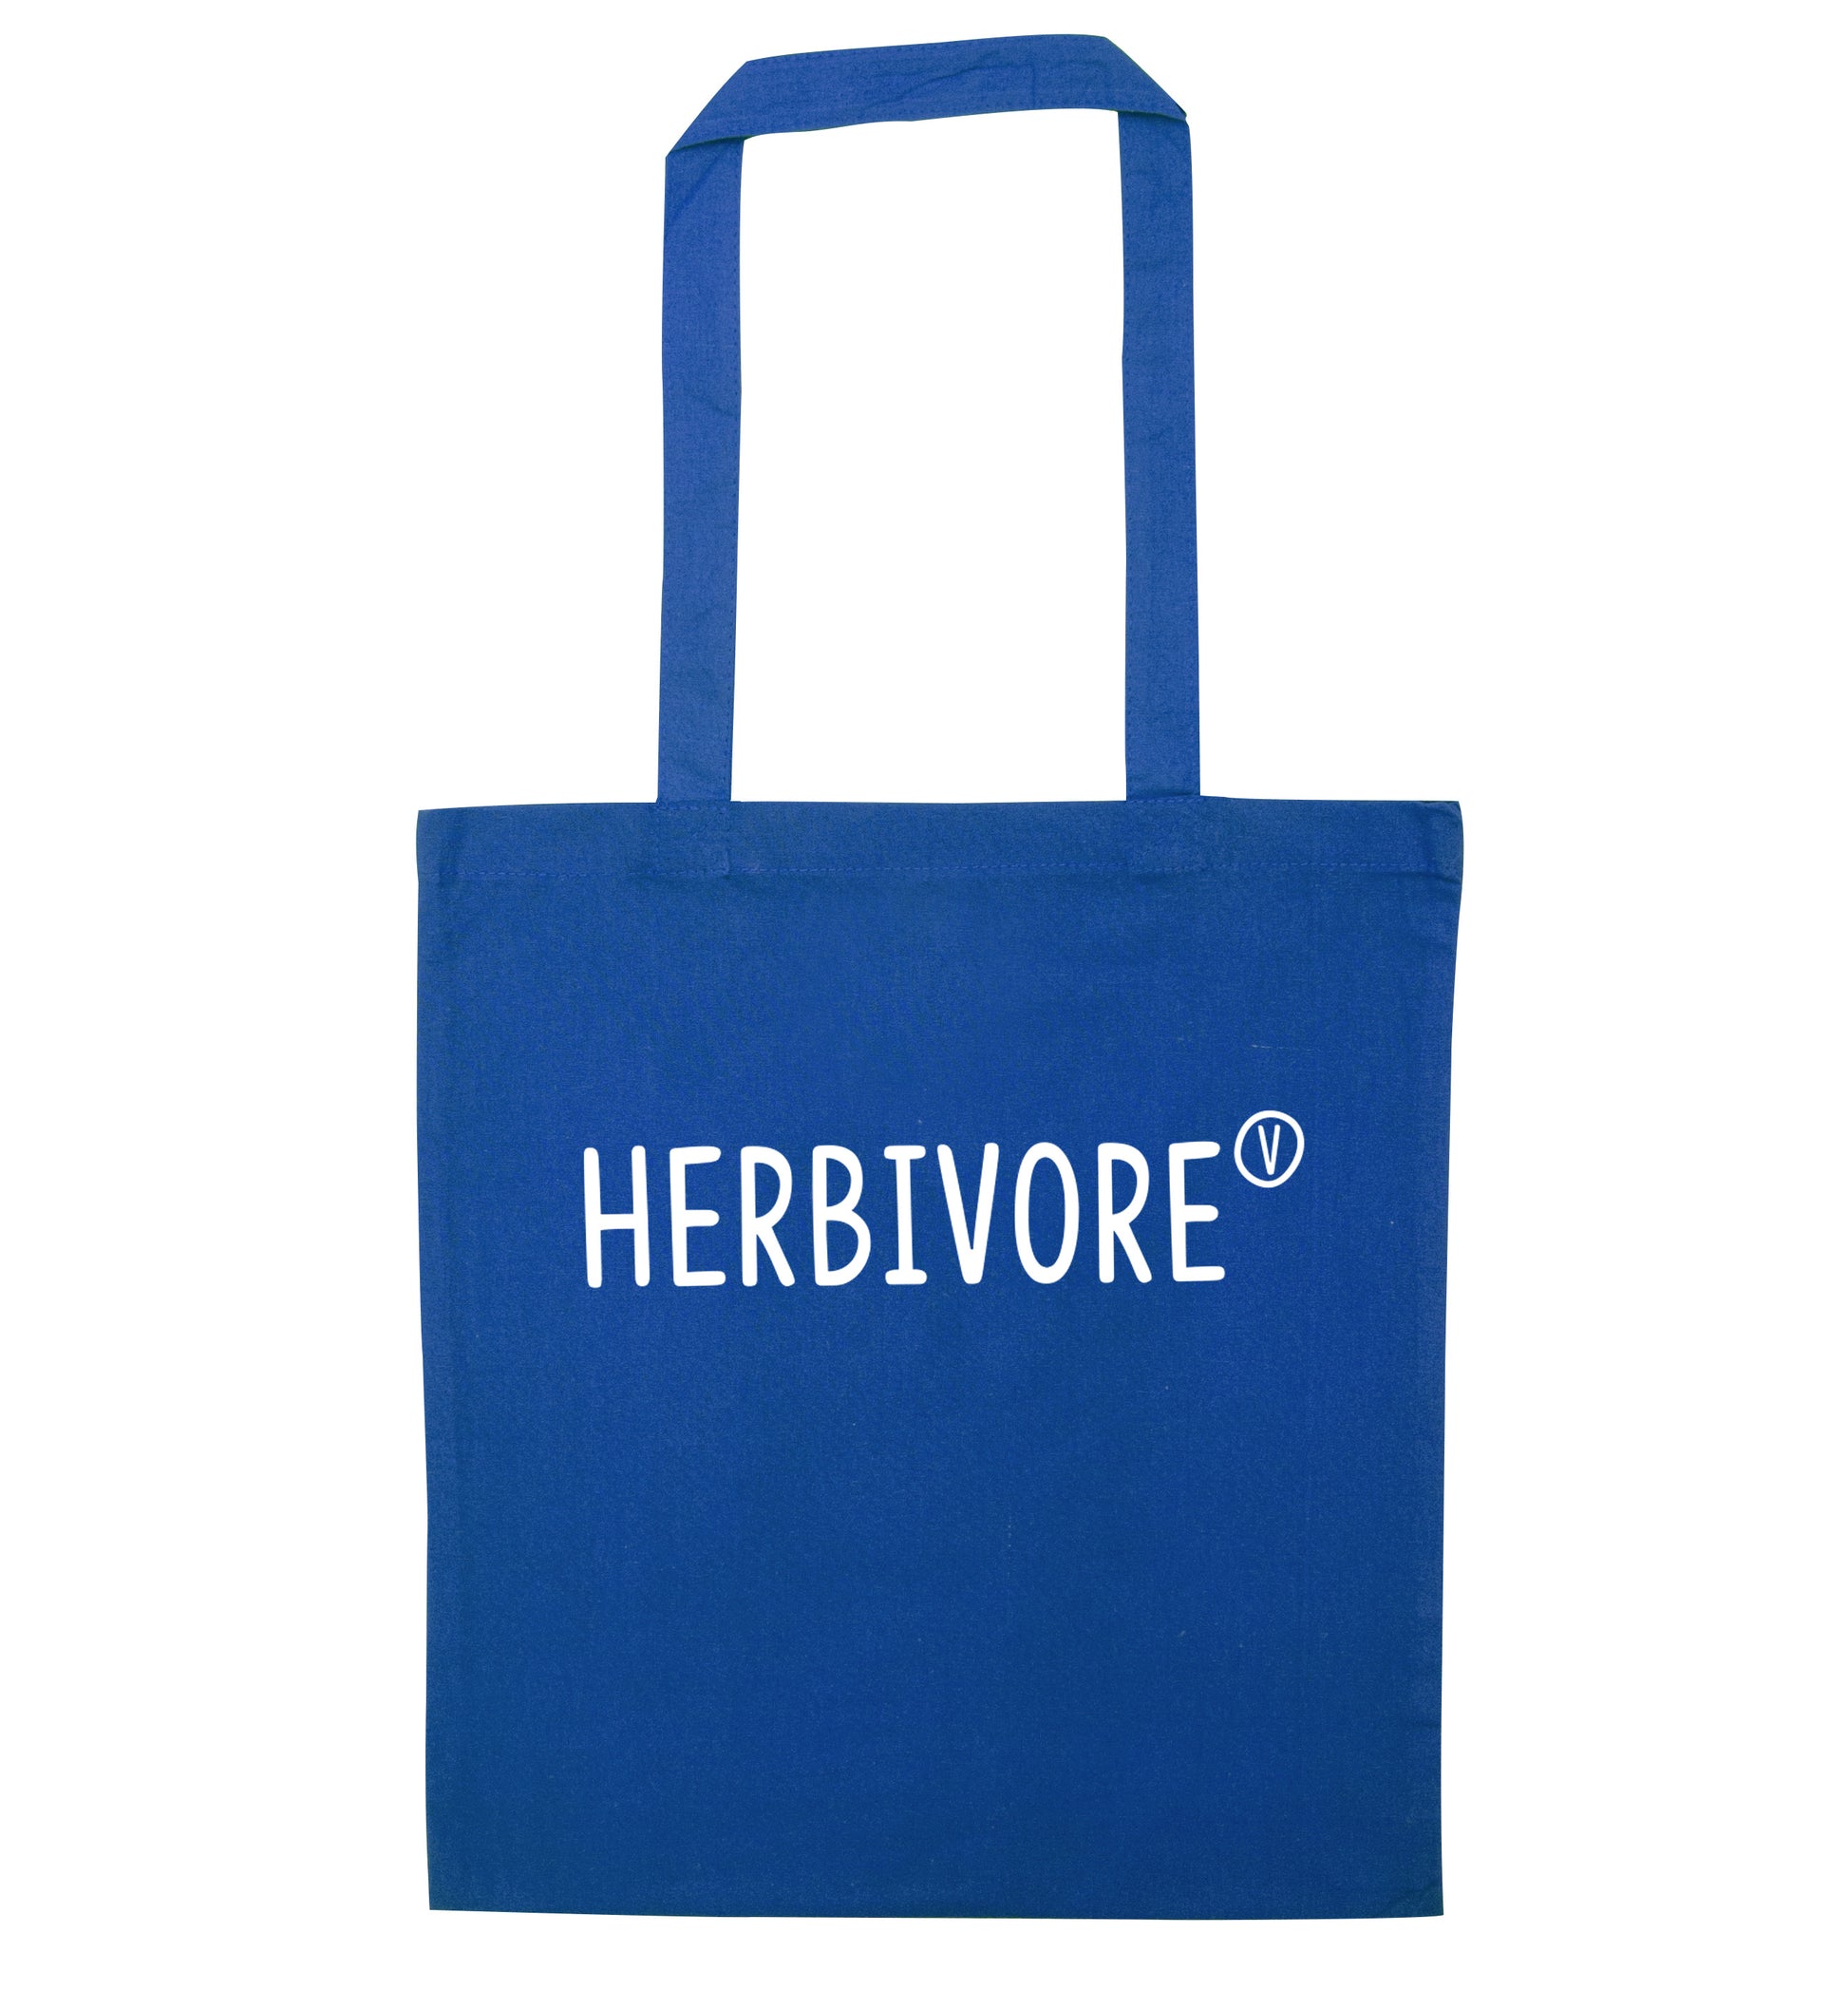 Herbivore blue tote bag